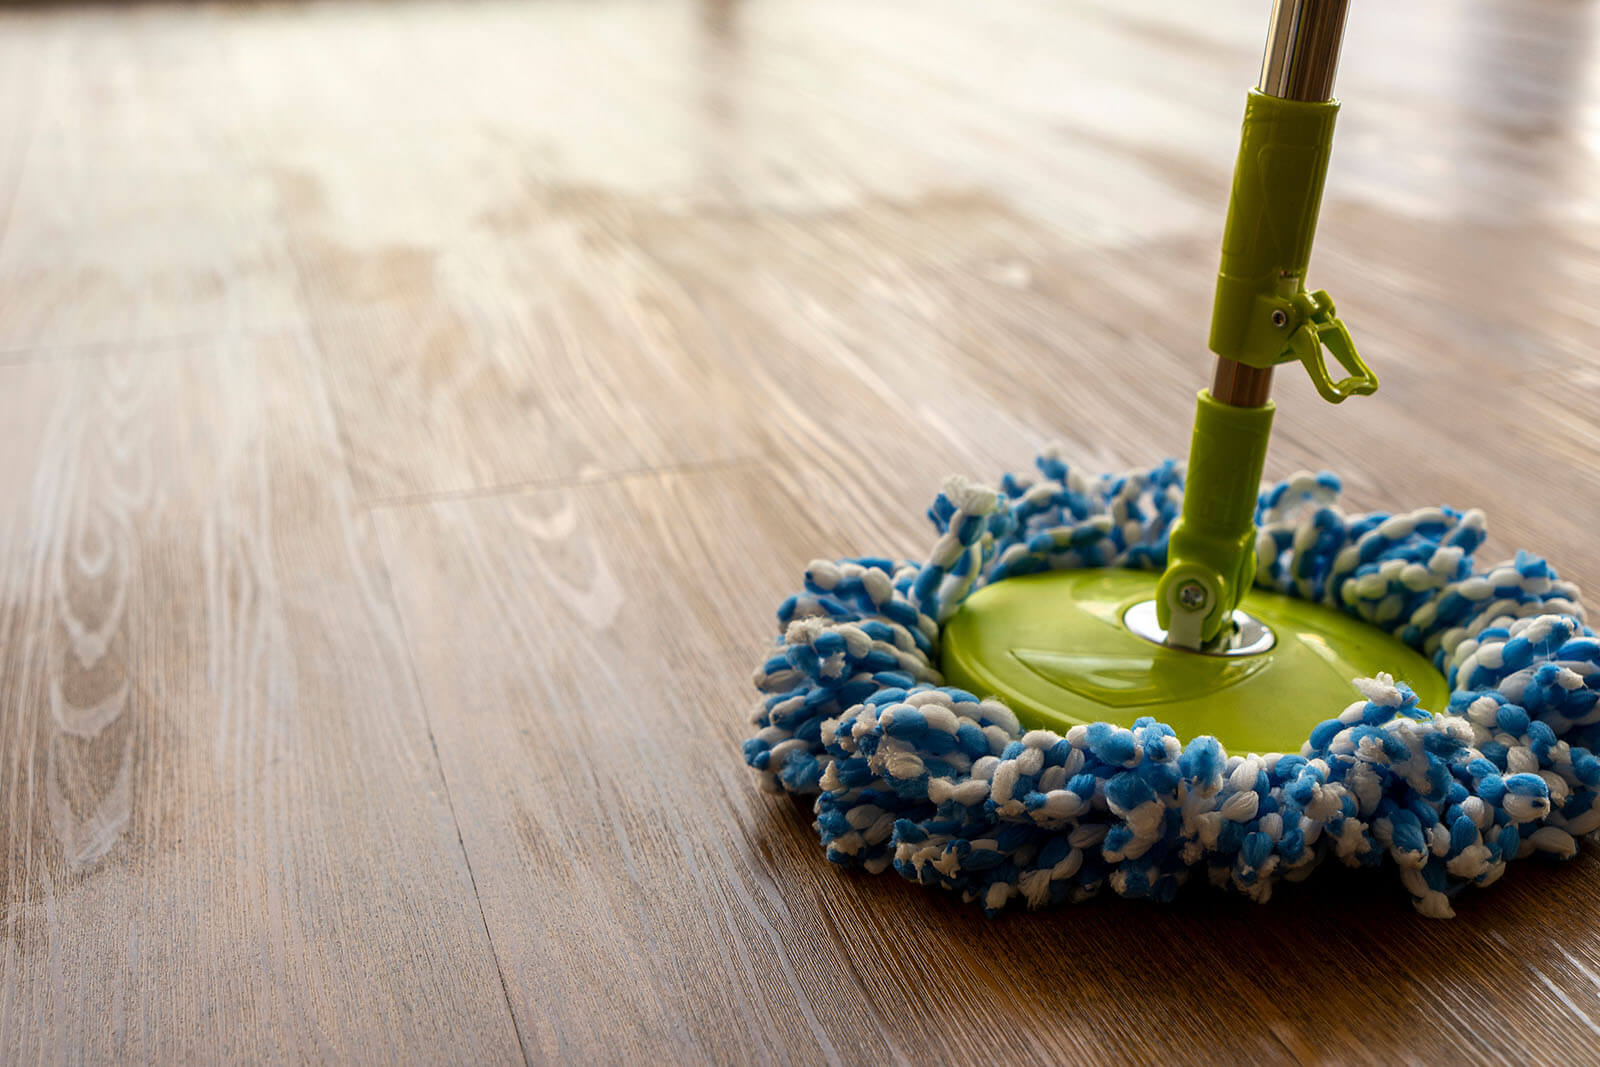 Floor Care& Maintenance: How To Clean Vinyl Plank Flooring